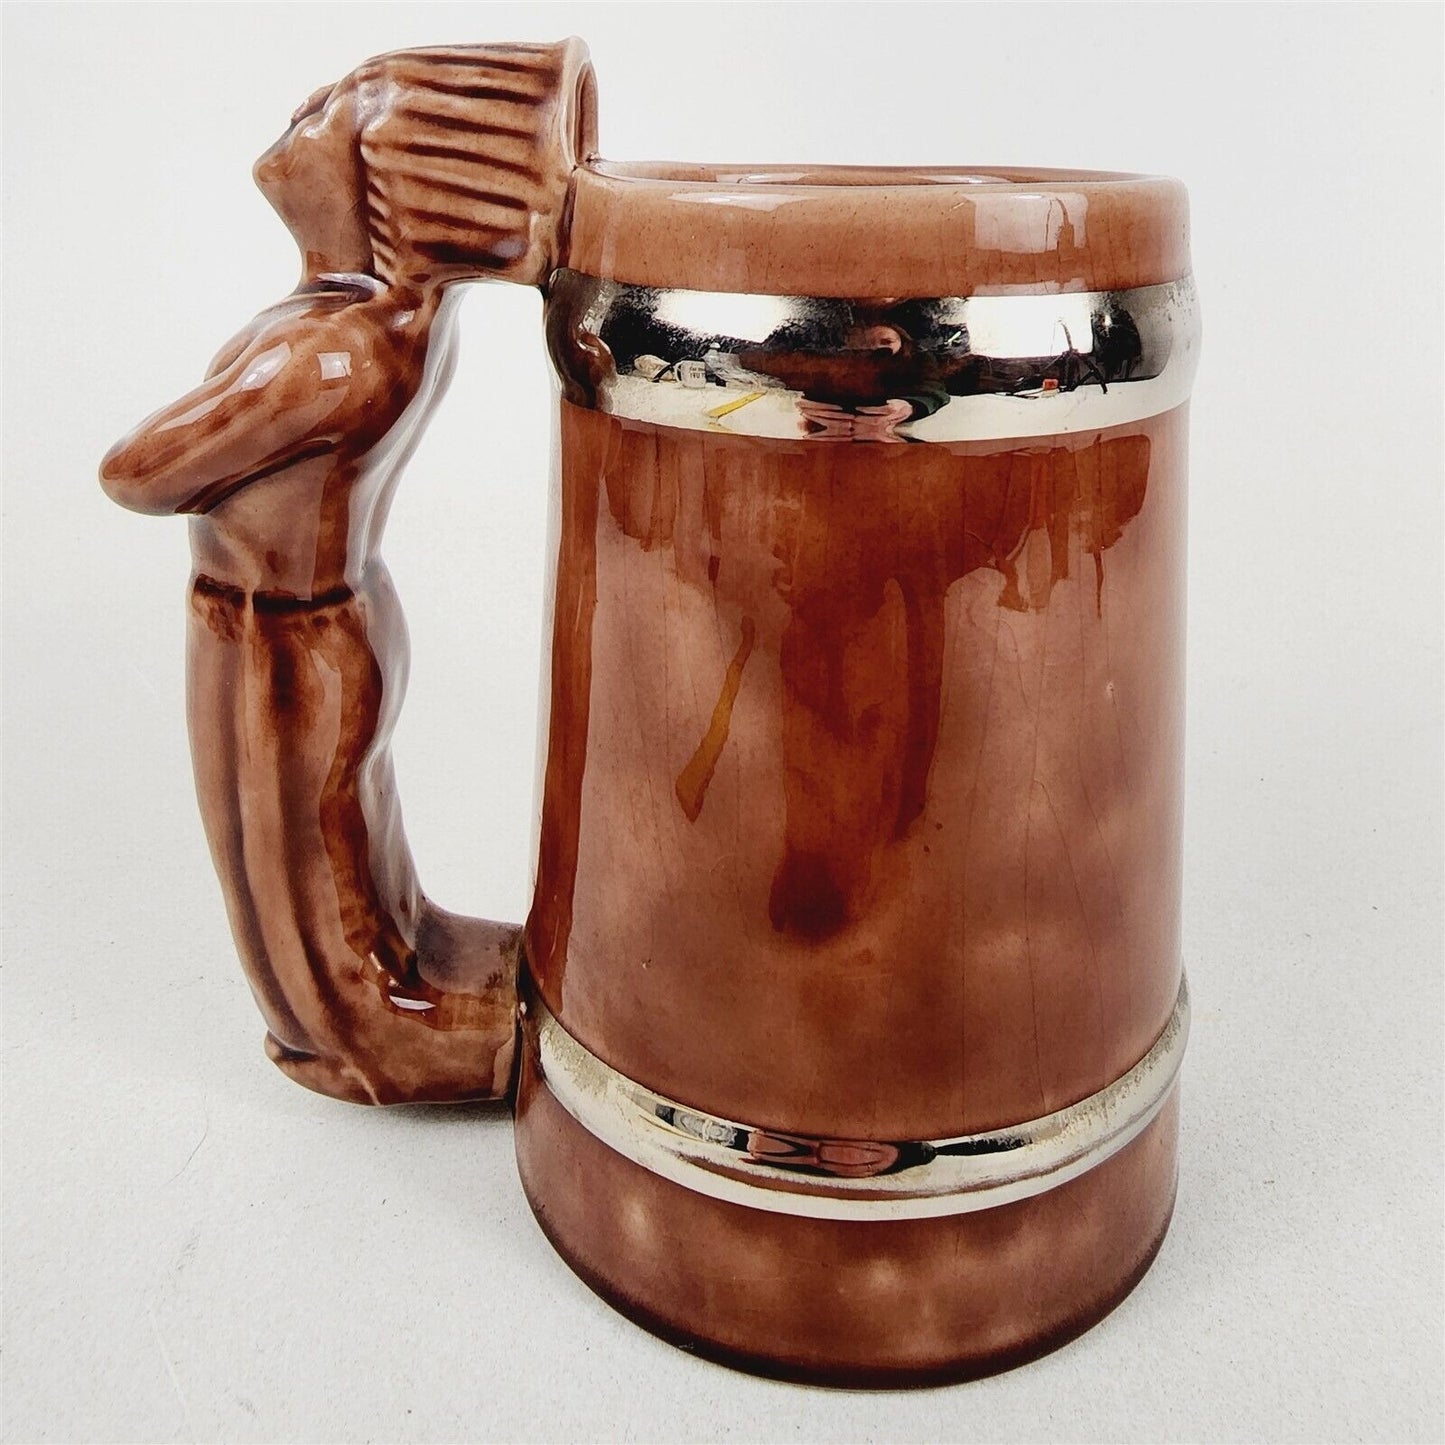 Vintage Stein Mug Figural Chief Indian Handle "W" Washington - 5 3/4" tall